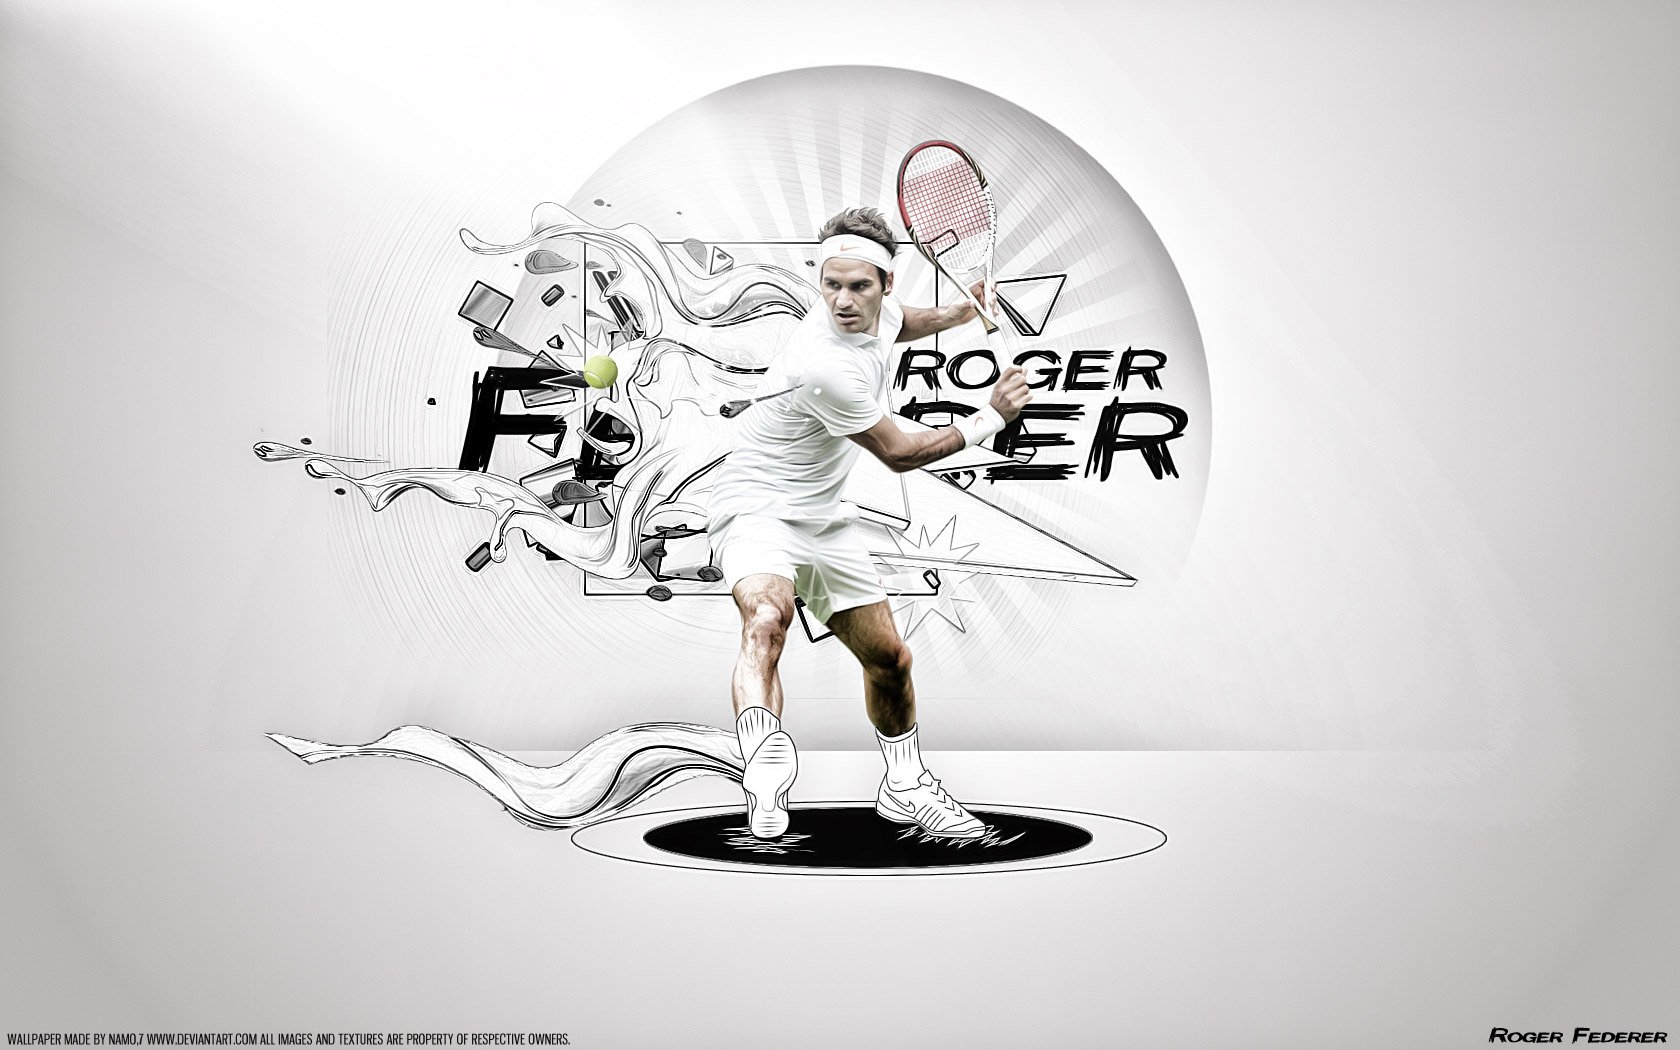 Roger Federer Wallpaper and Background Imagex1050